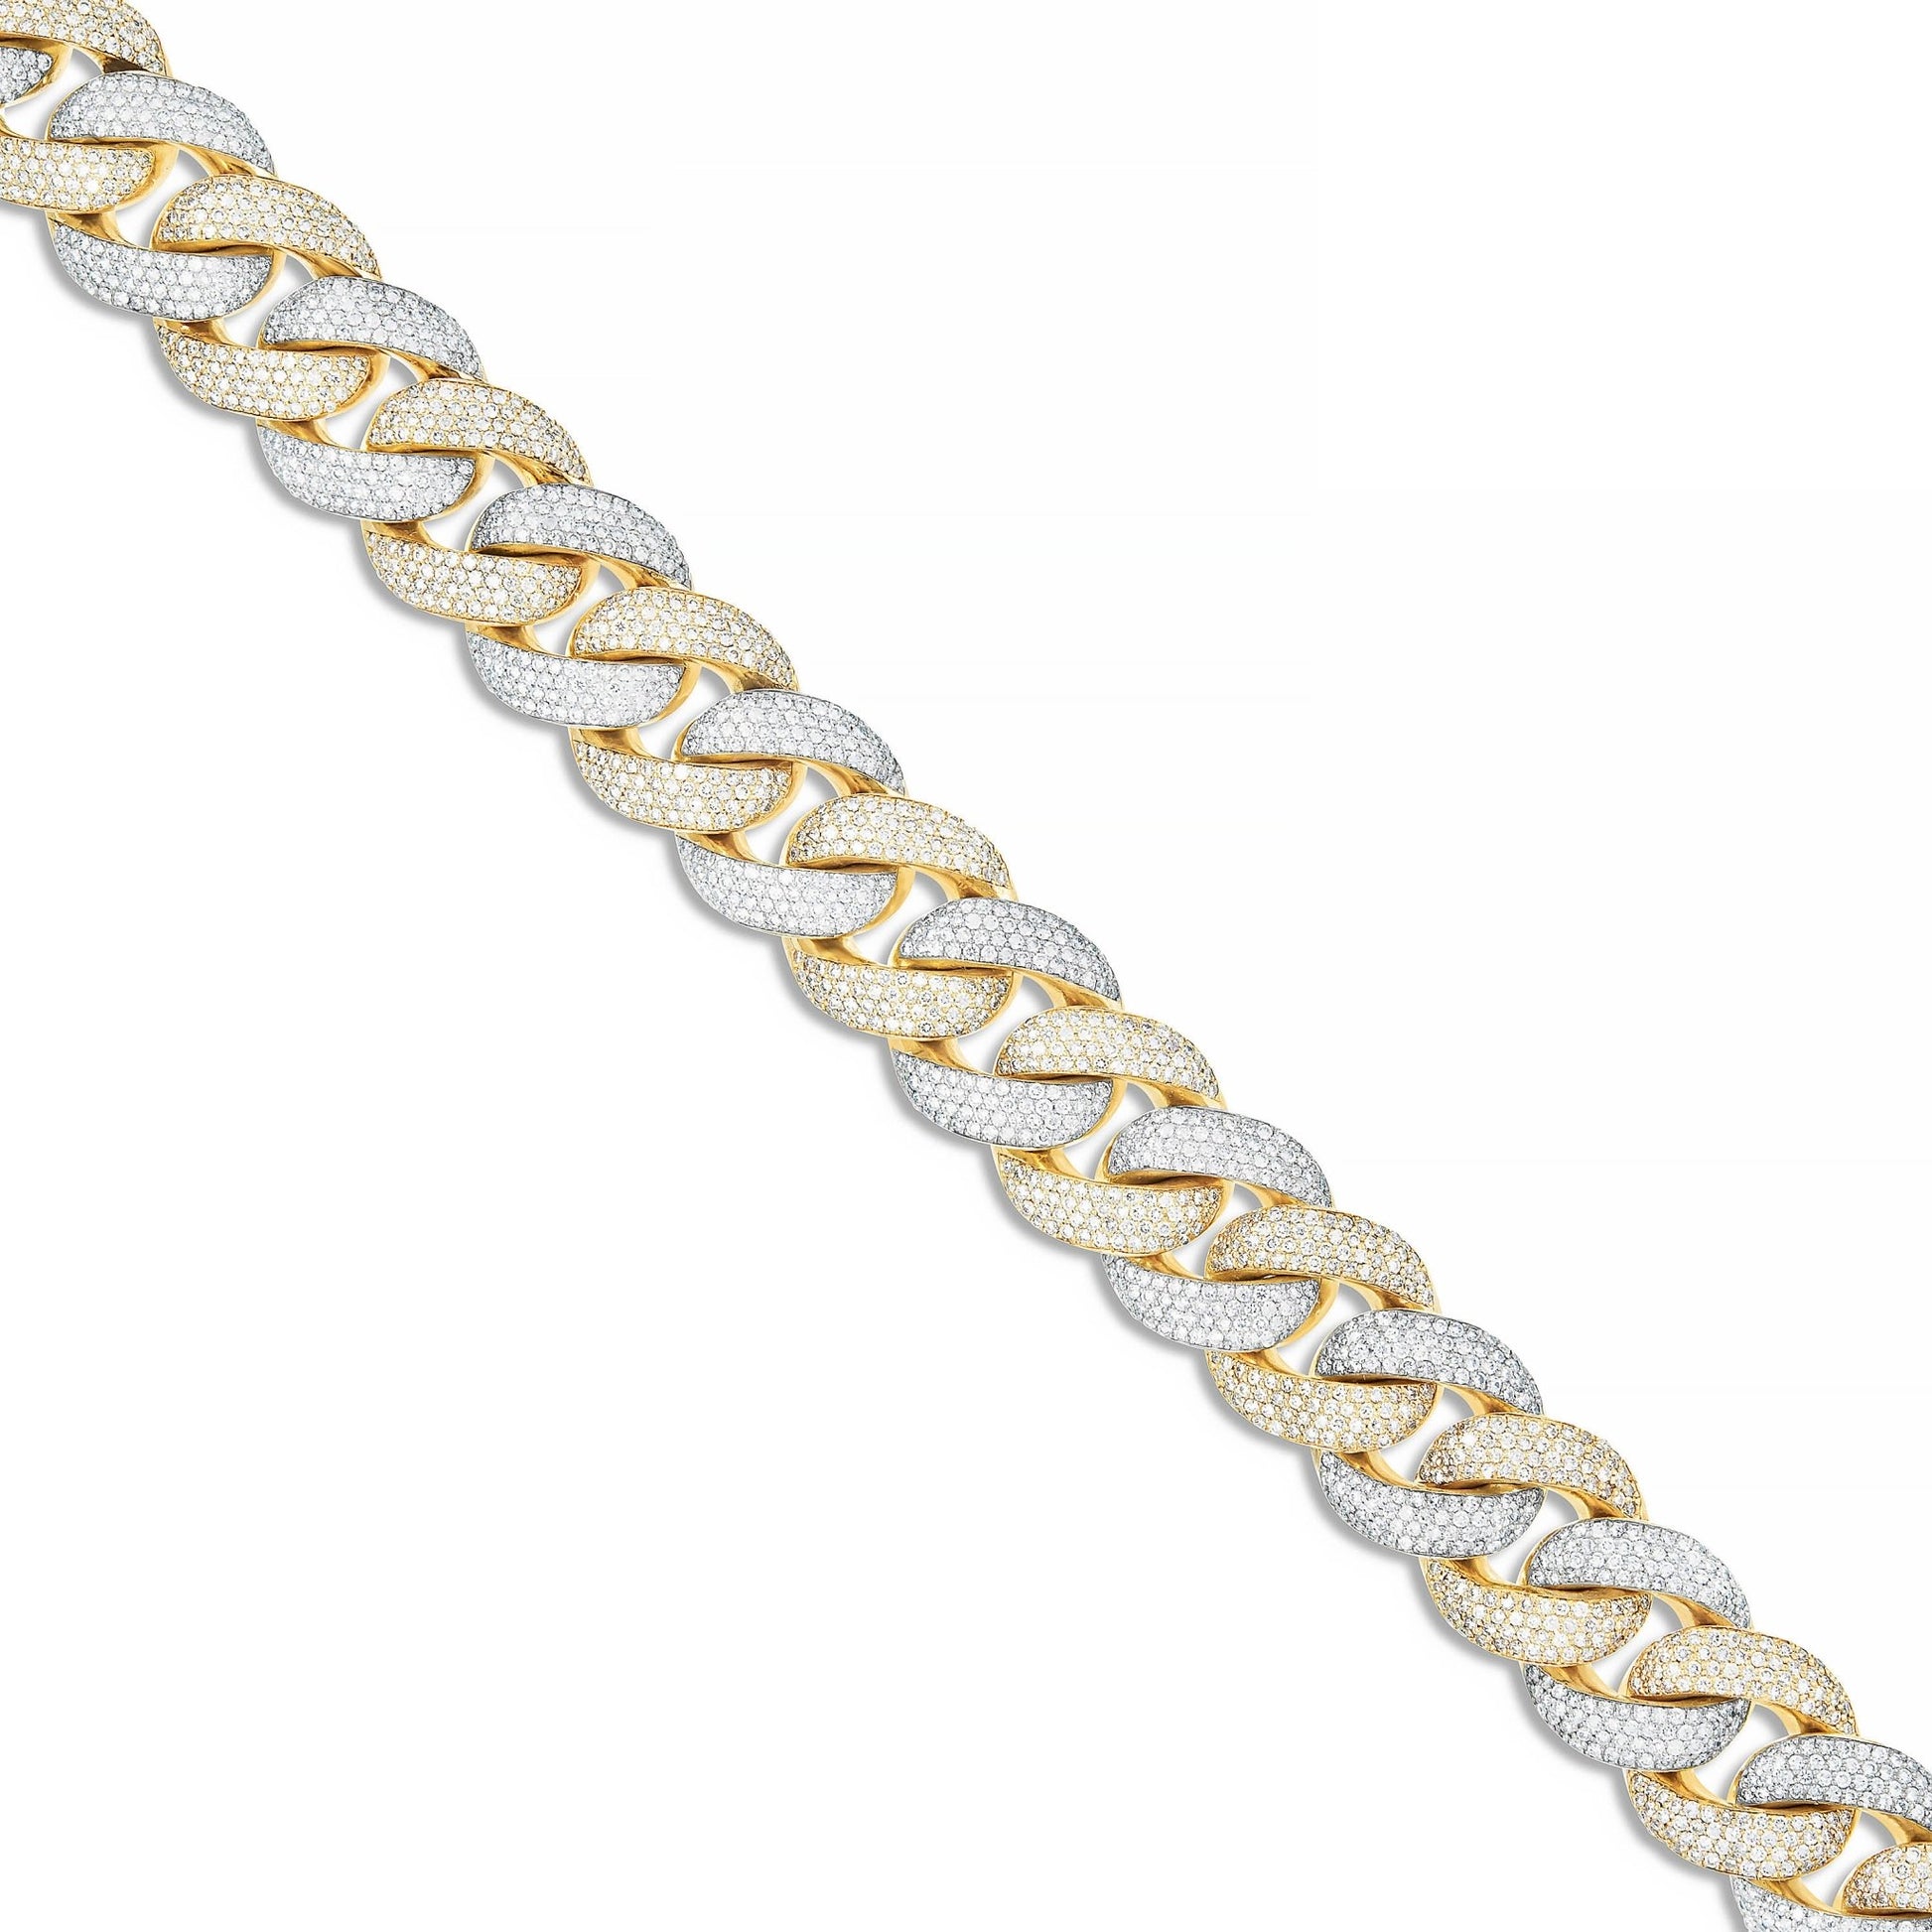 Prong set Diamond Cuban Chain, 16 mm - Shyne Jewelers Yellow & White Gold Shyne Jewelers